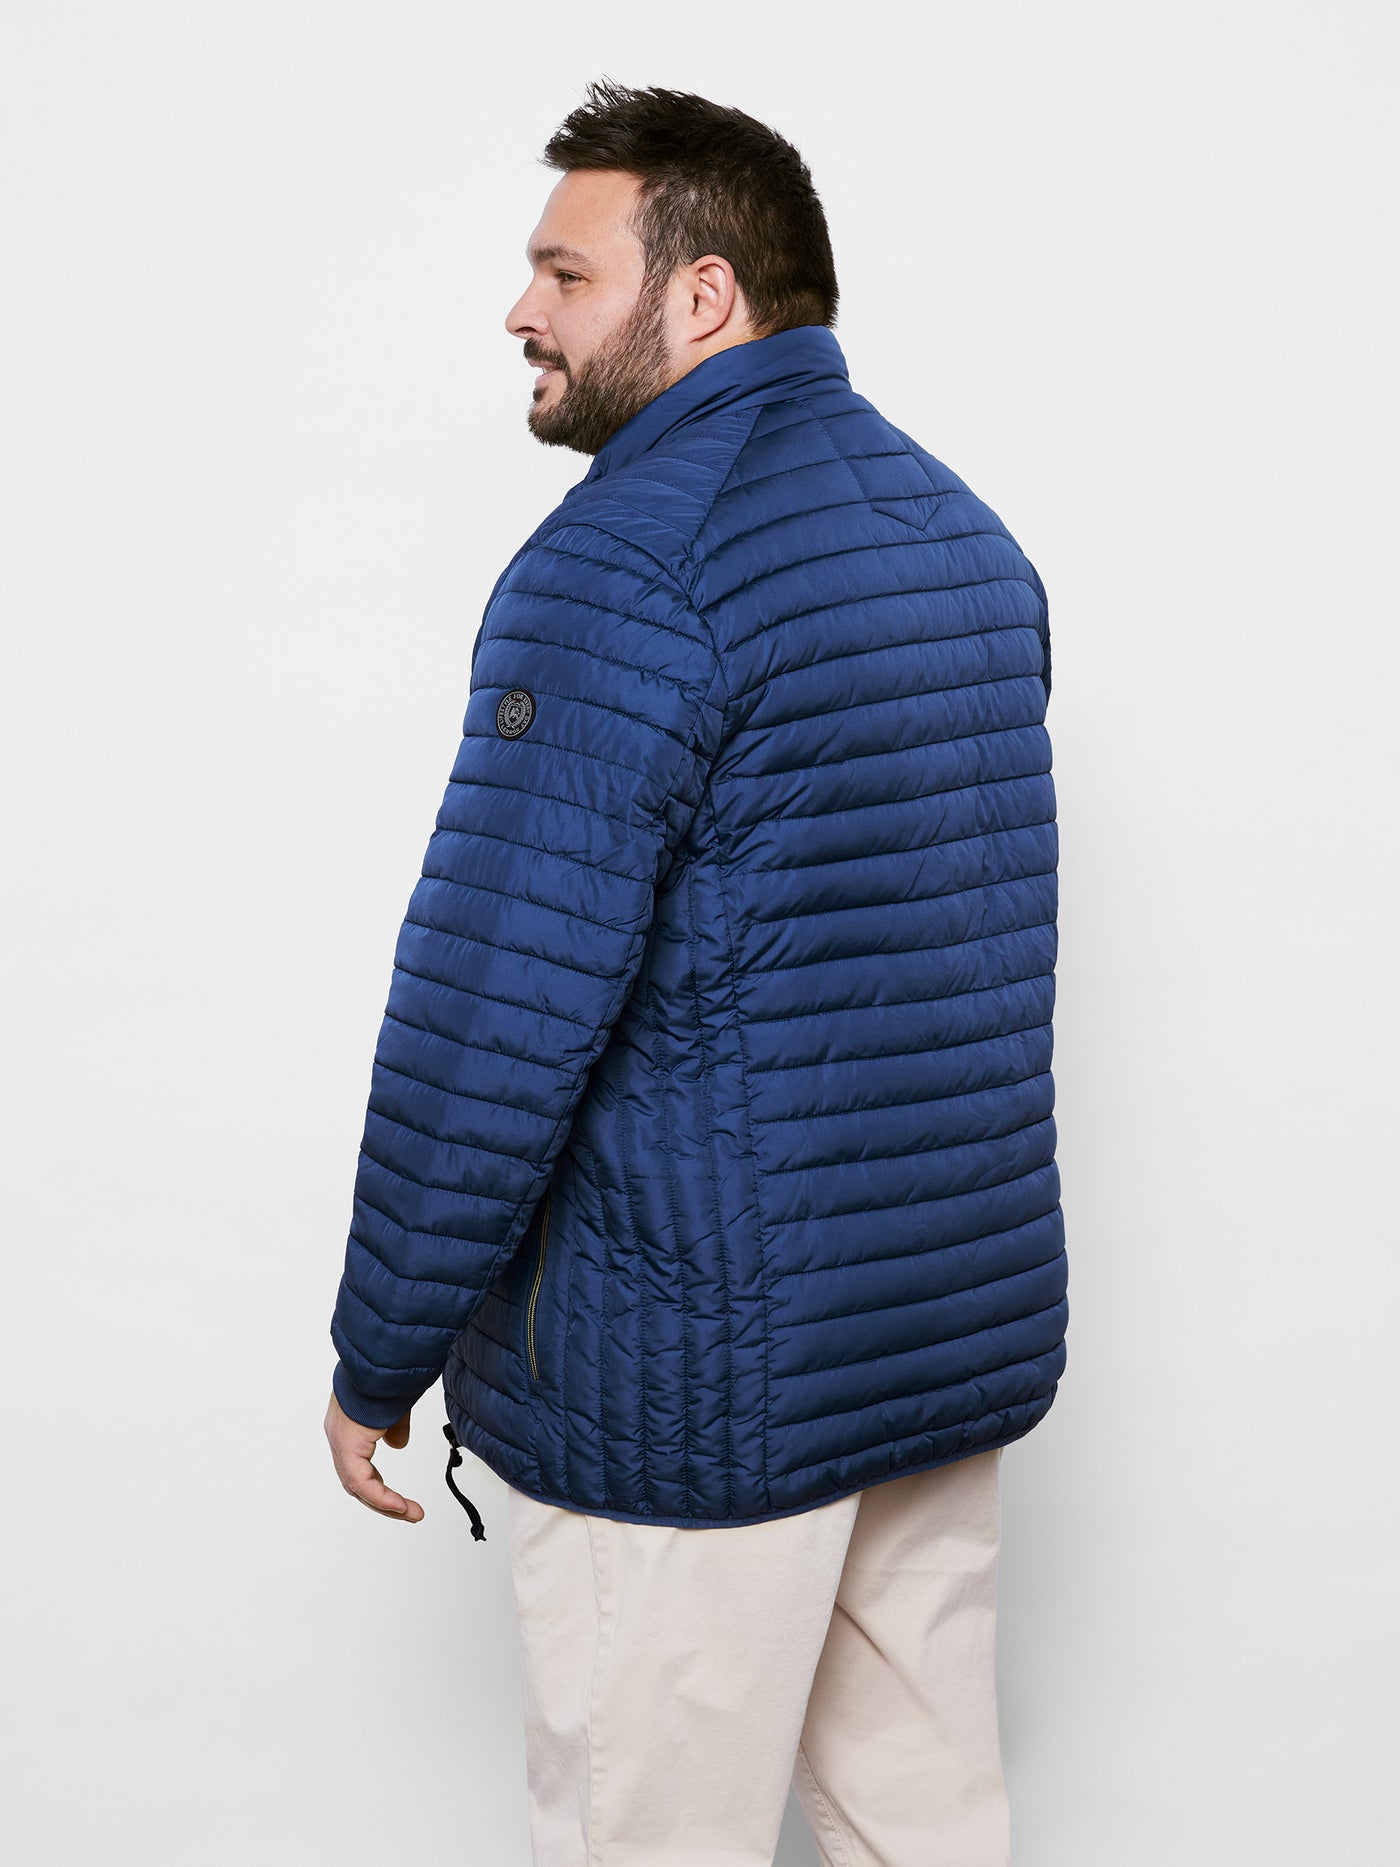 lightly LERROS – SHOP Quilted jacket, padded